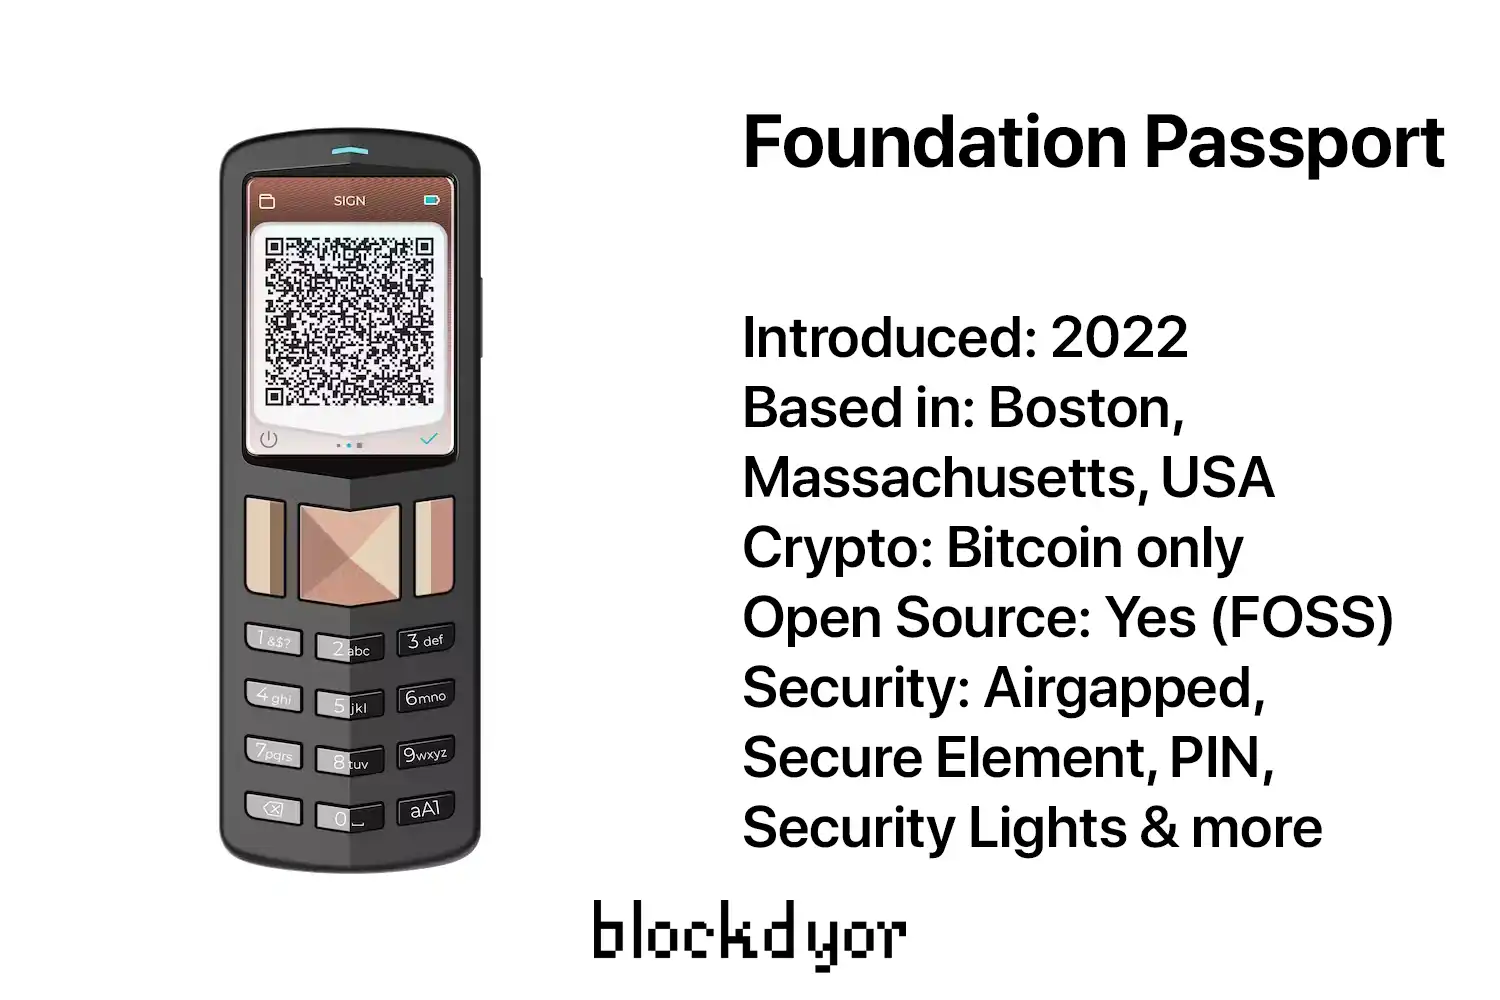 Foundation Passport Overview